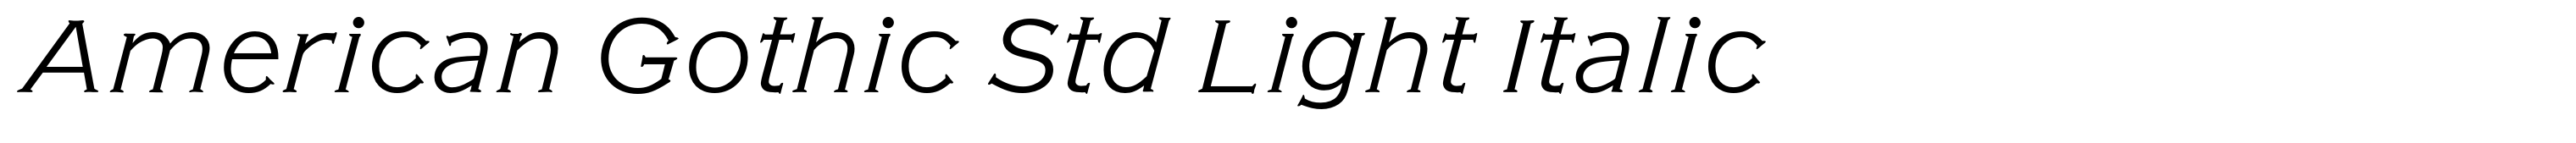 American Gothic Std Light Italic